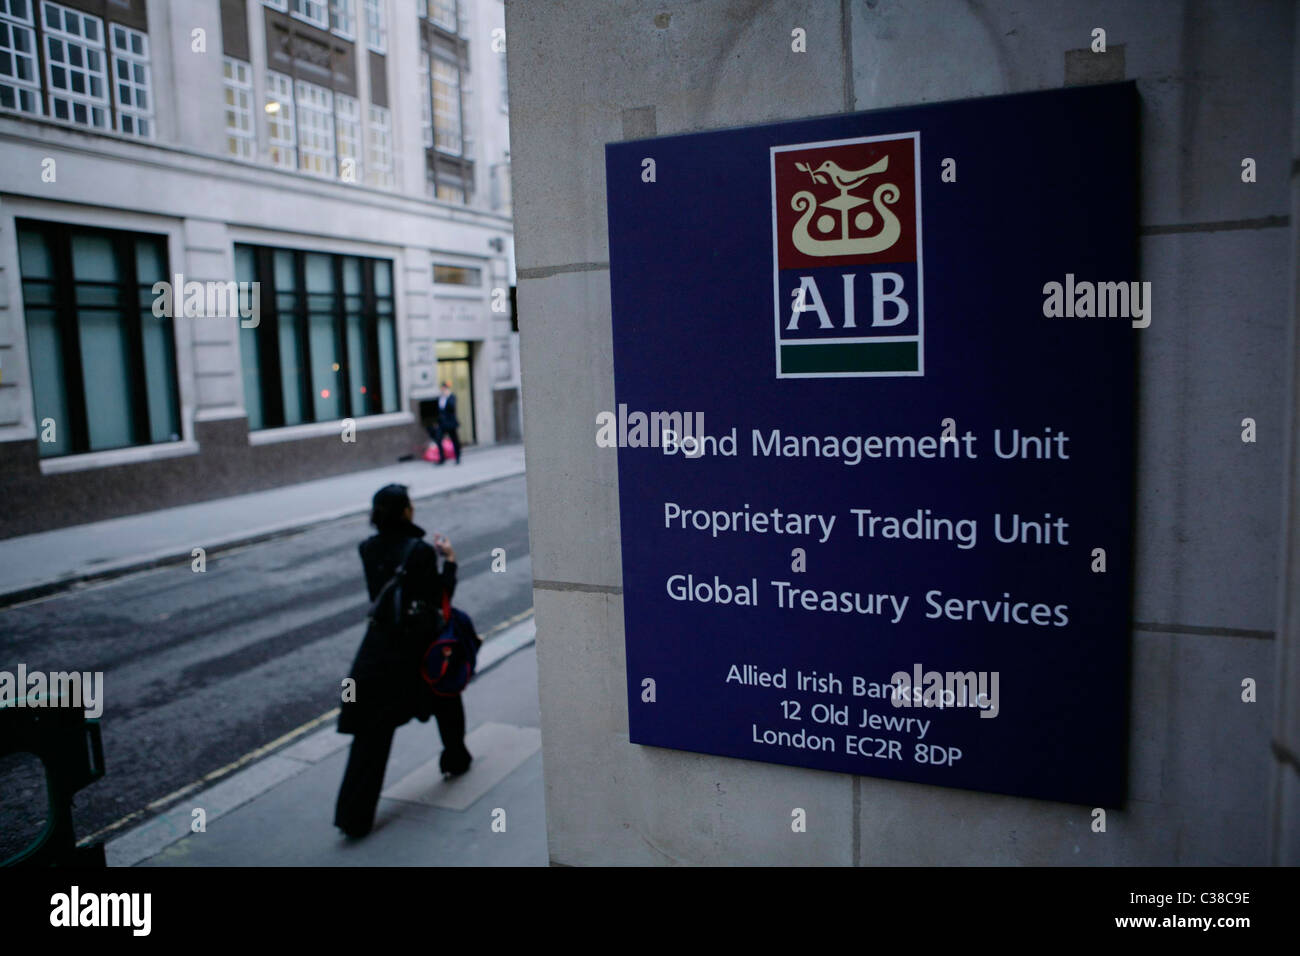 Allied irish banks logo hi-res stock photography and images - Alamy